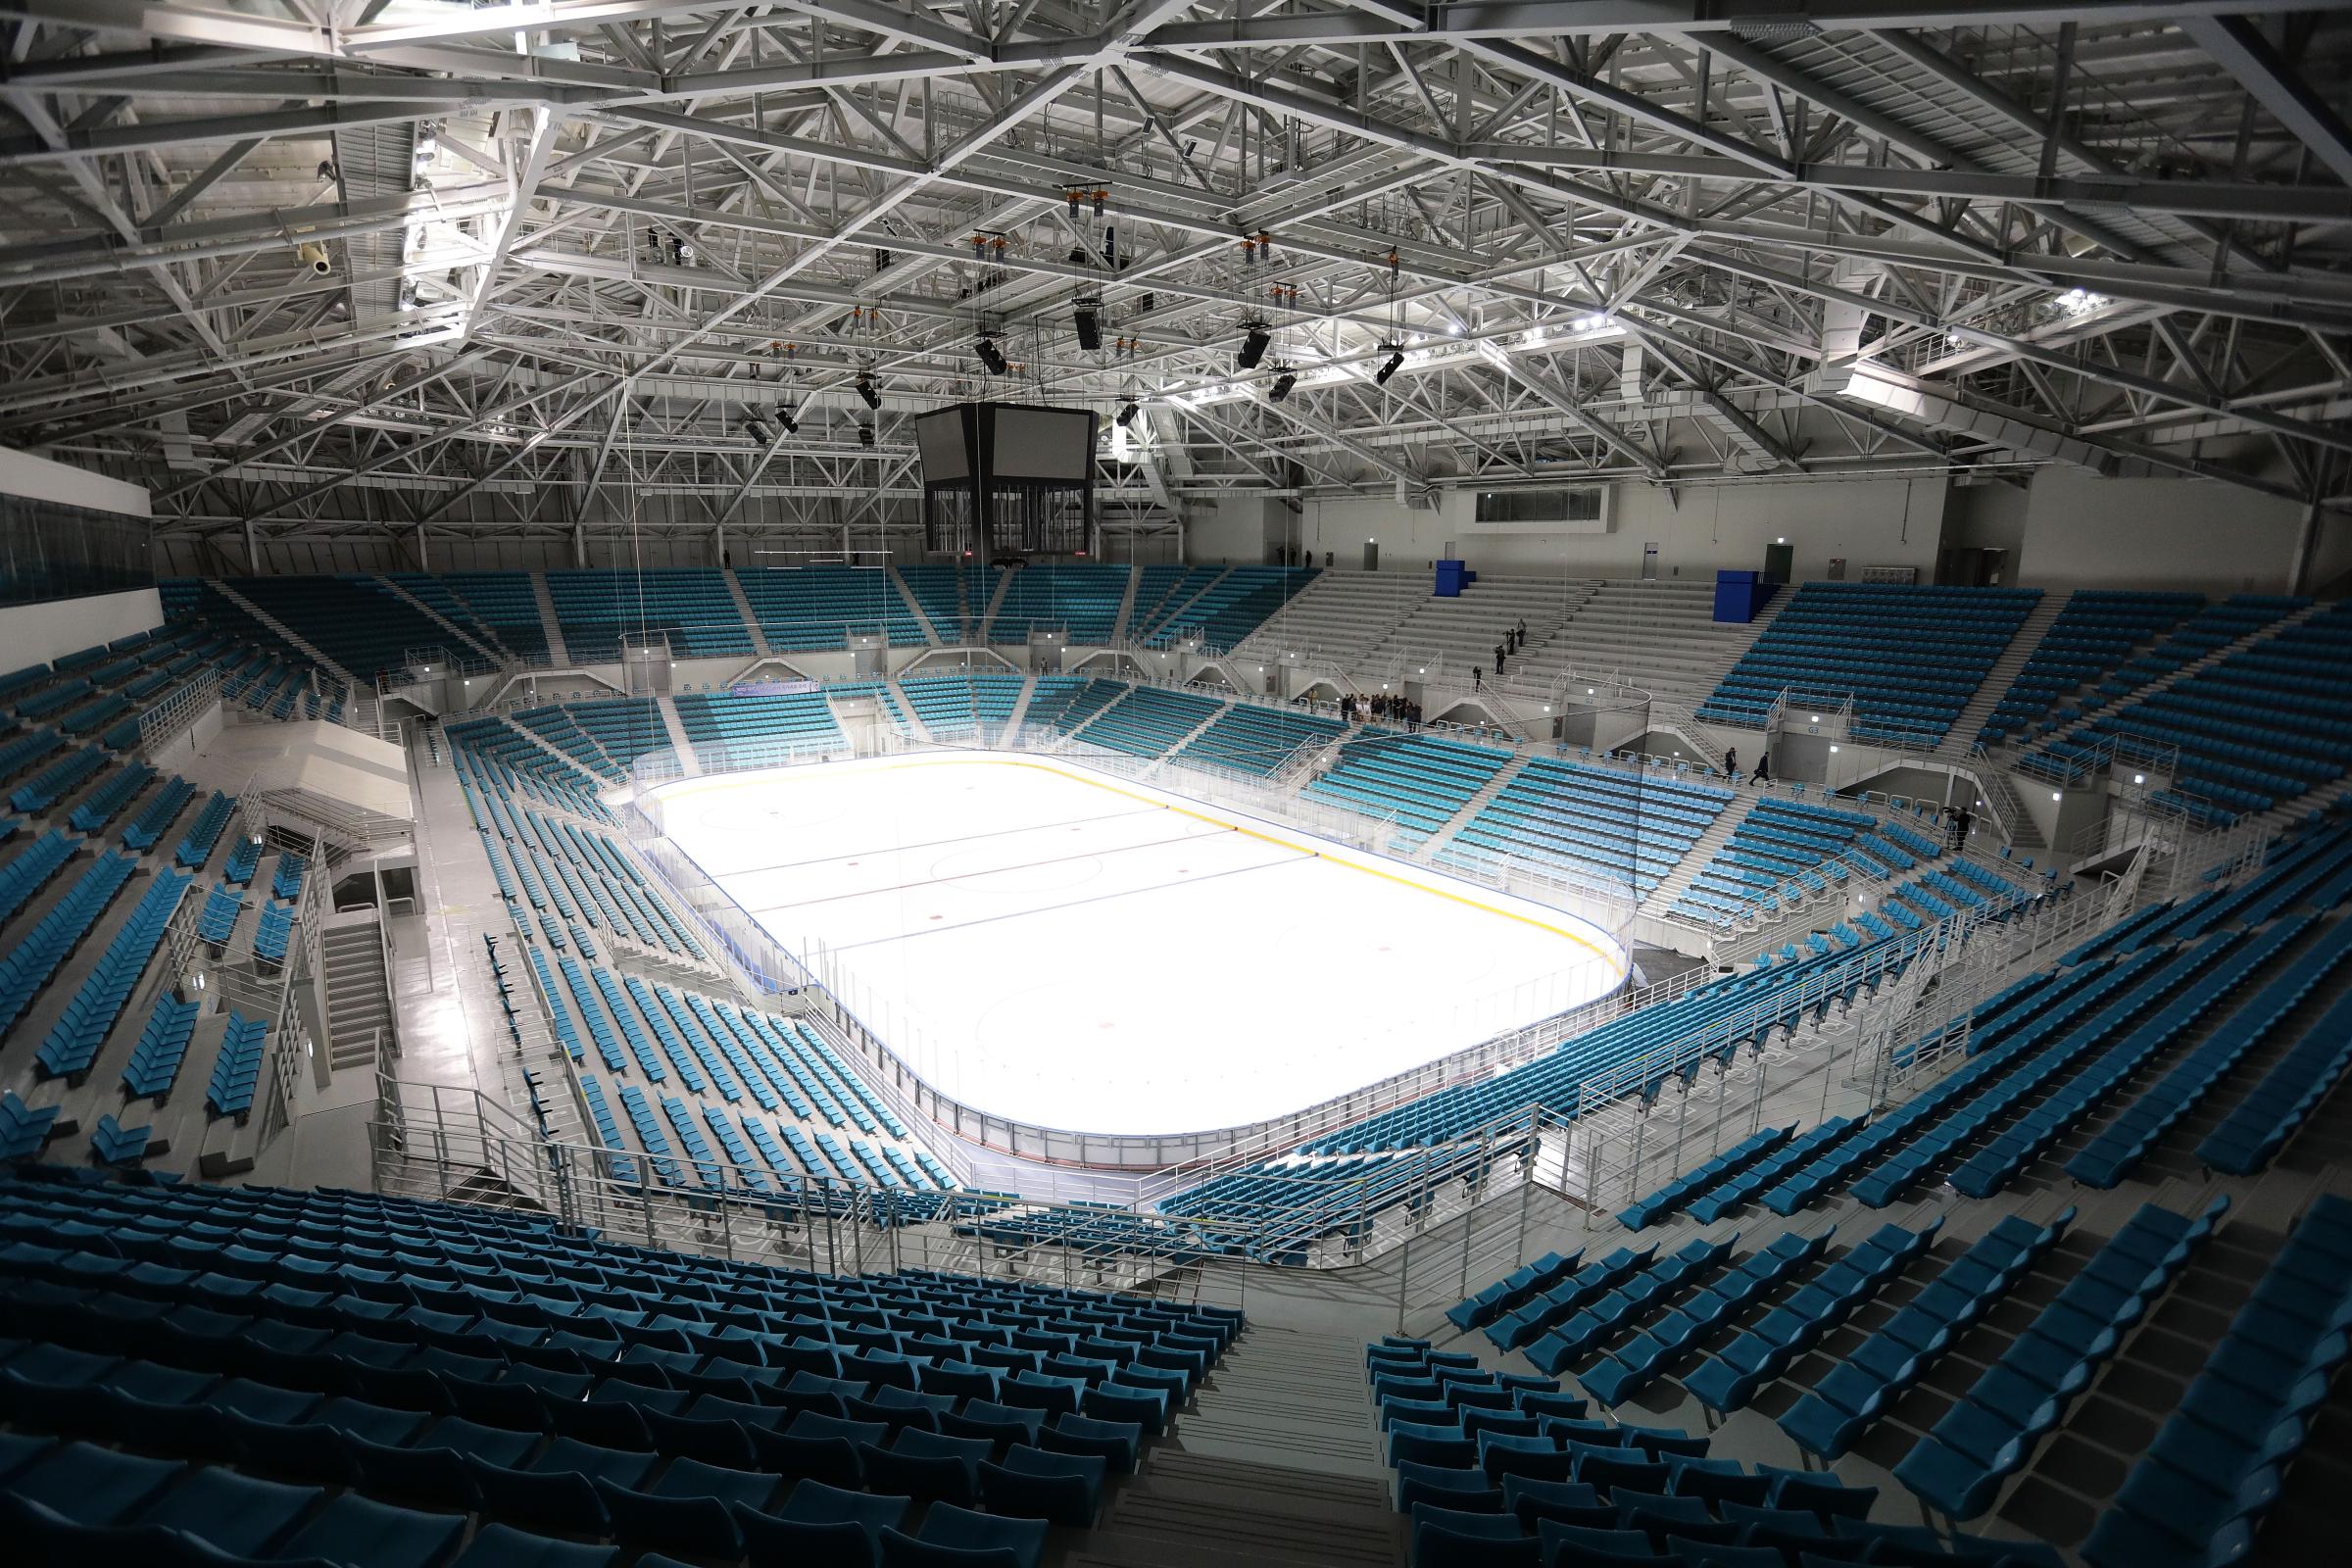 PyeongChang 2018 Winter Olympics Venue Tour